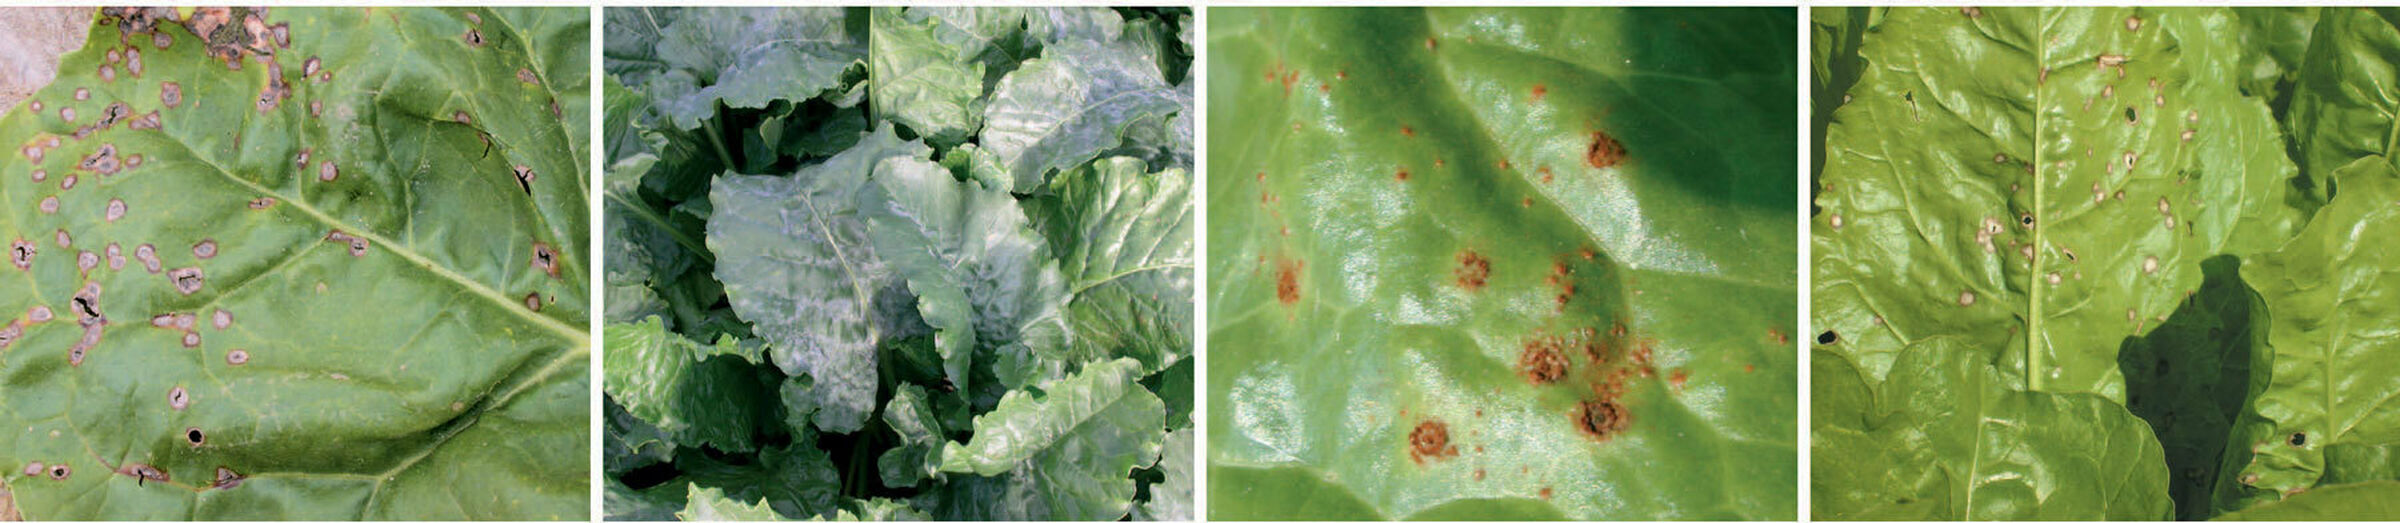 SESVanderHave - sugarbeet pests and diseases - leaf diseases, symptoms, spreading and control